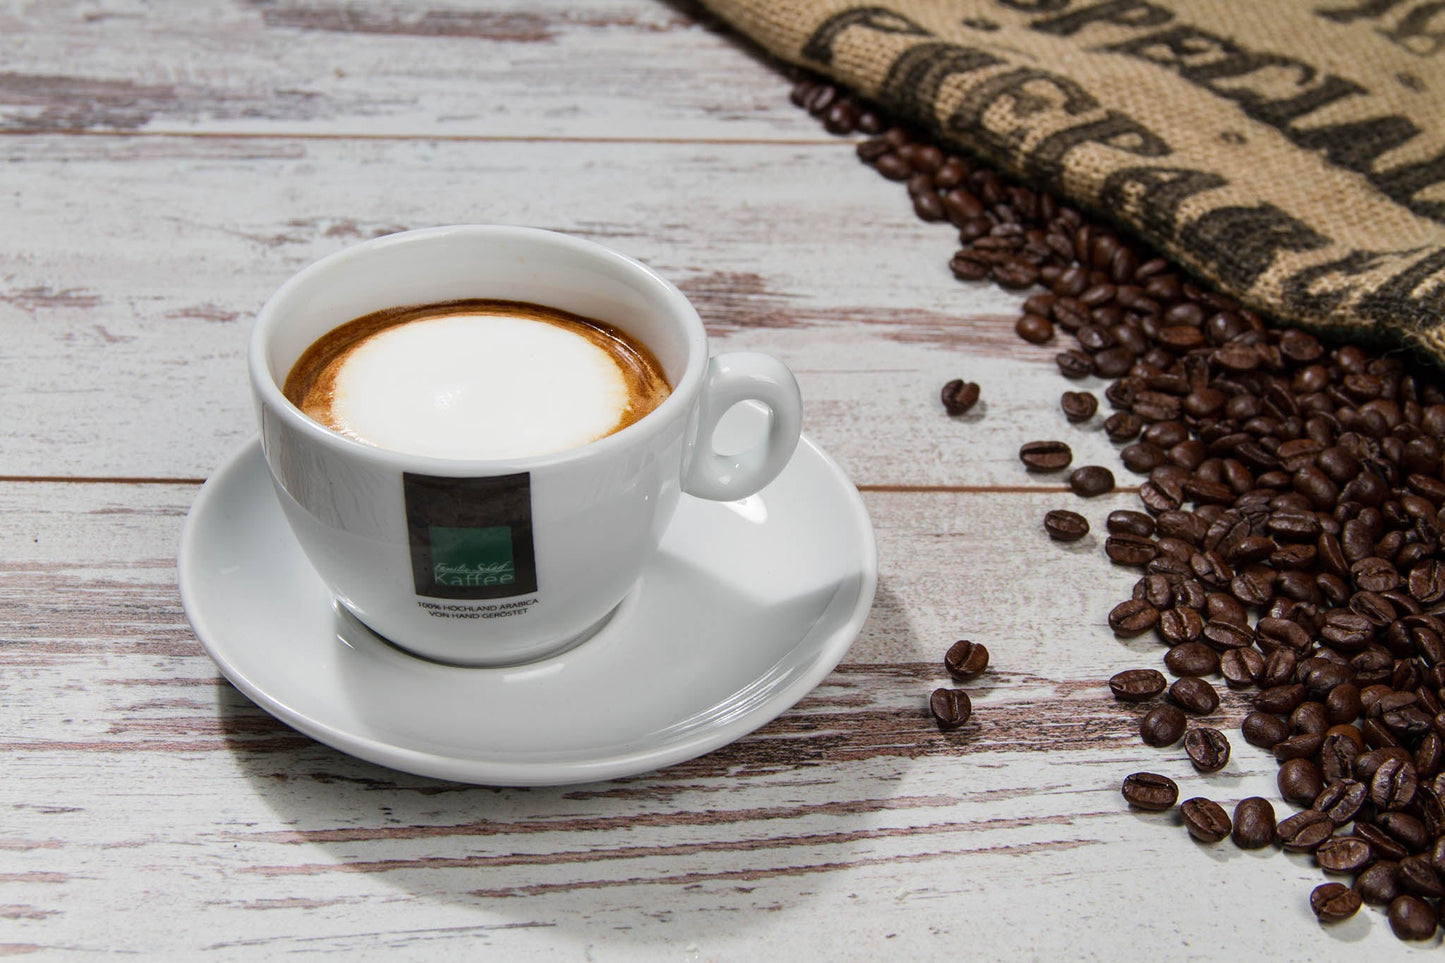 Schärf family coffee “Gourmet” (100% Arabica coffee / Italian Roast)